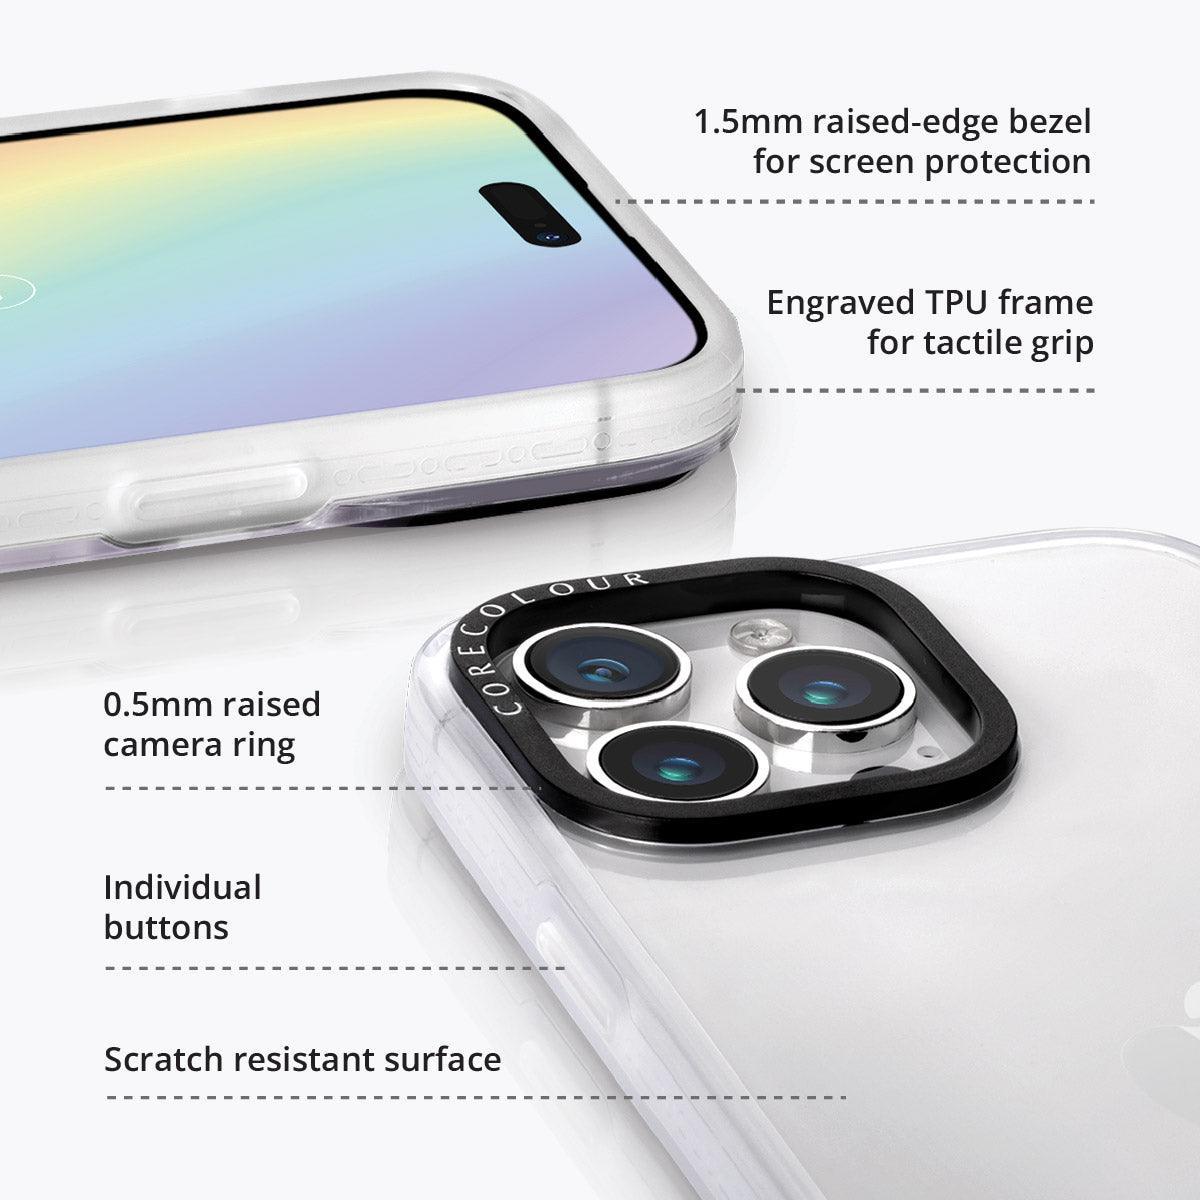 iPhone 13 Sketching Panda Phone Case MagSafe Compatible 